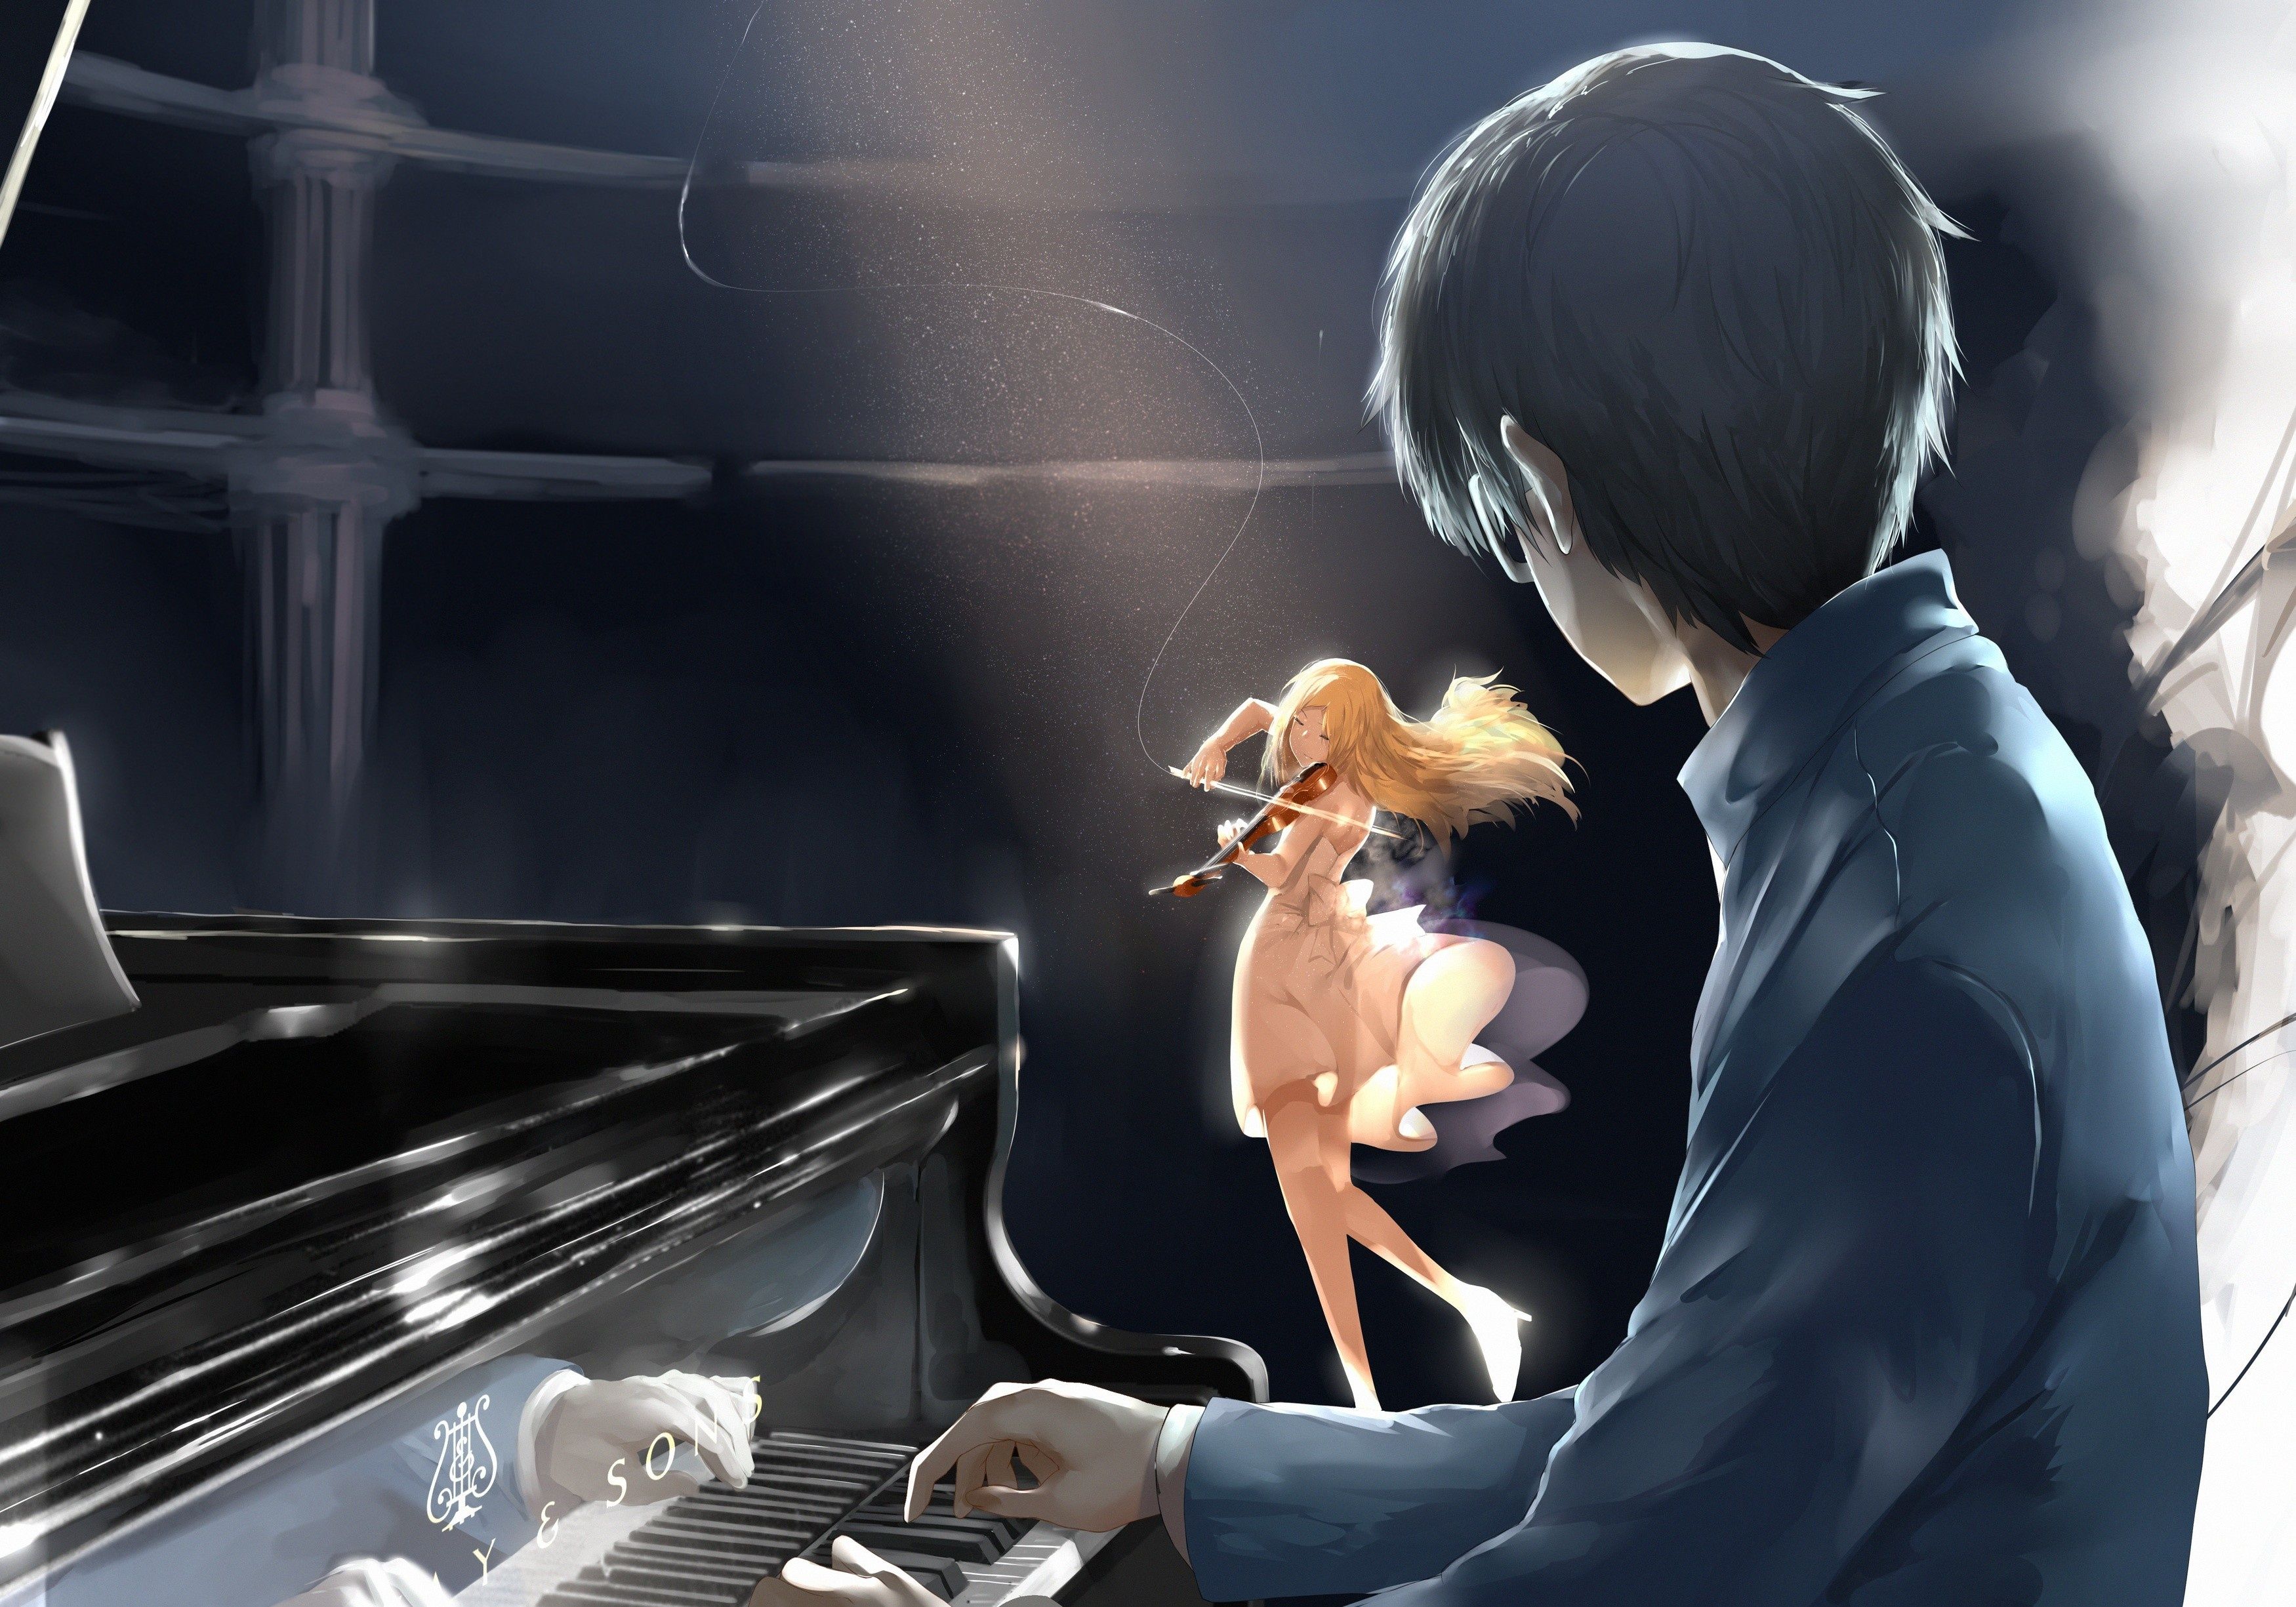 3500x2450 Anime series couple piano violin blonde girl wallpaper. 3500x2450. 1089935 on WallpaperBat